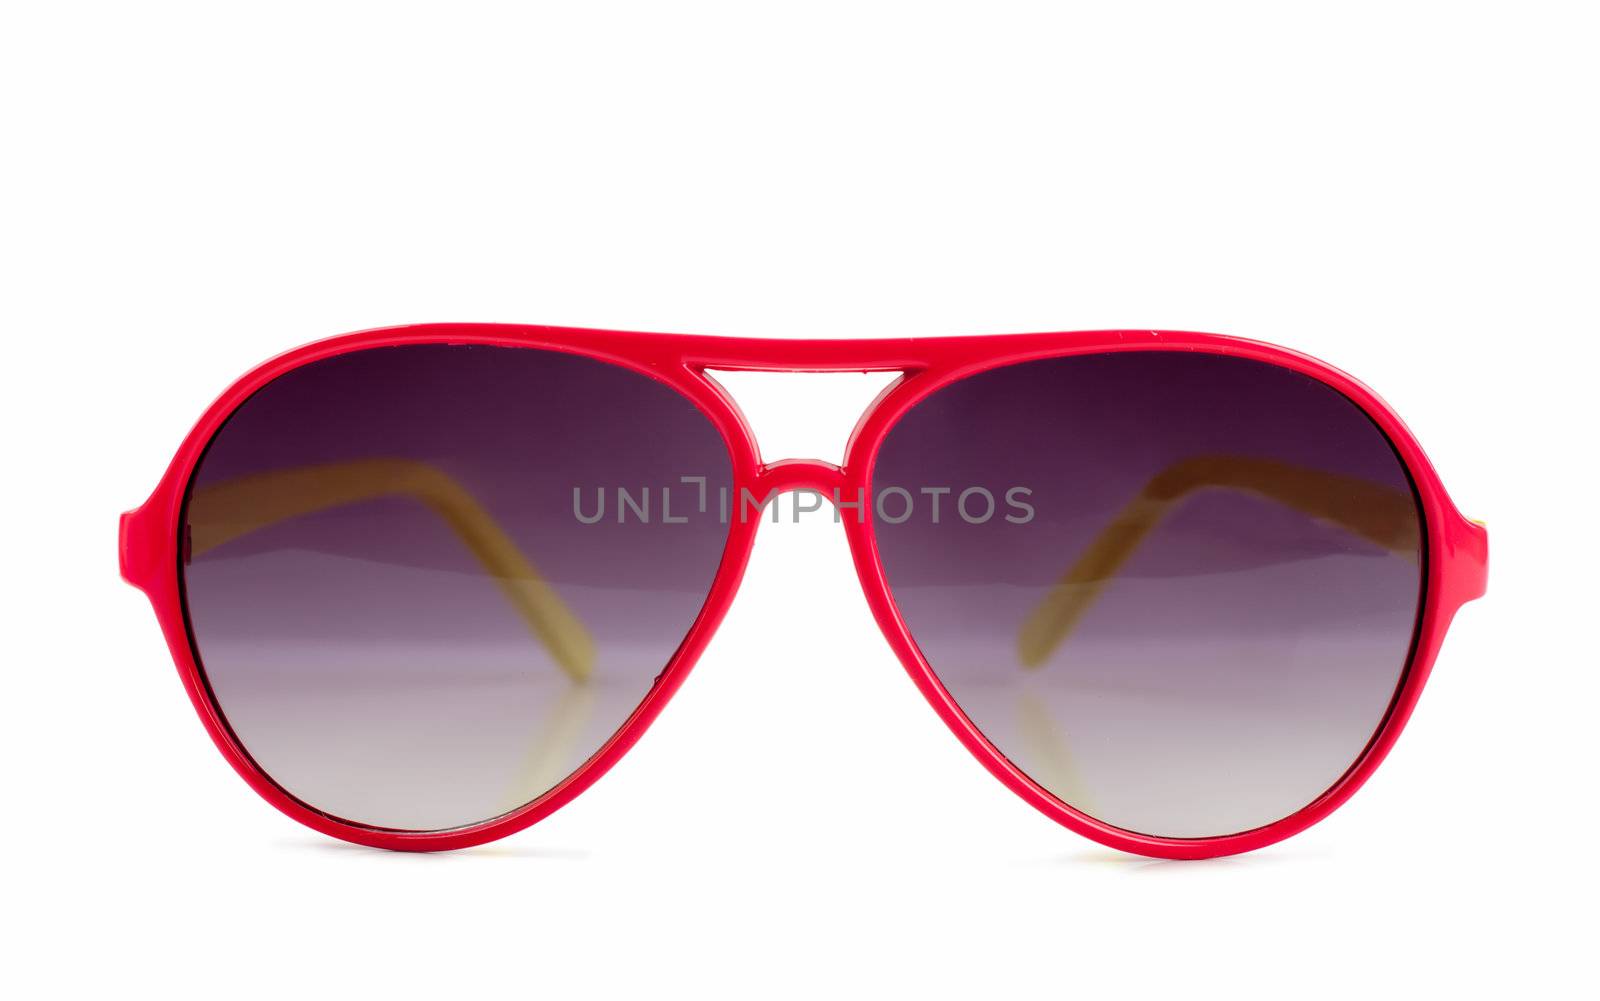 Sunglasses by AGorohov